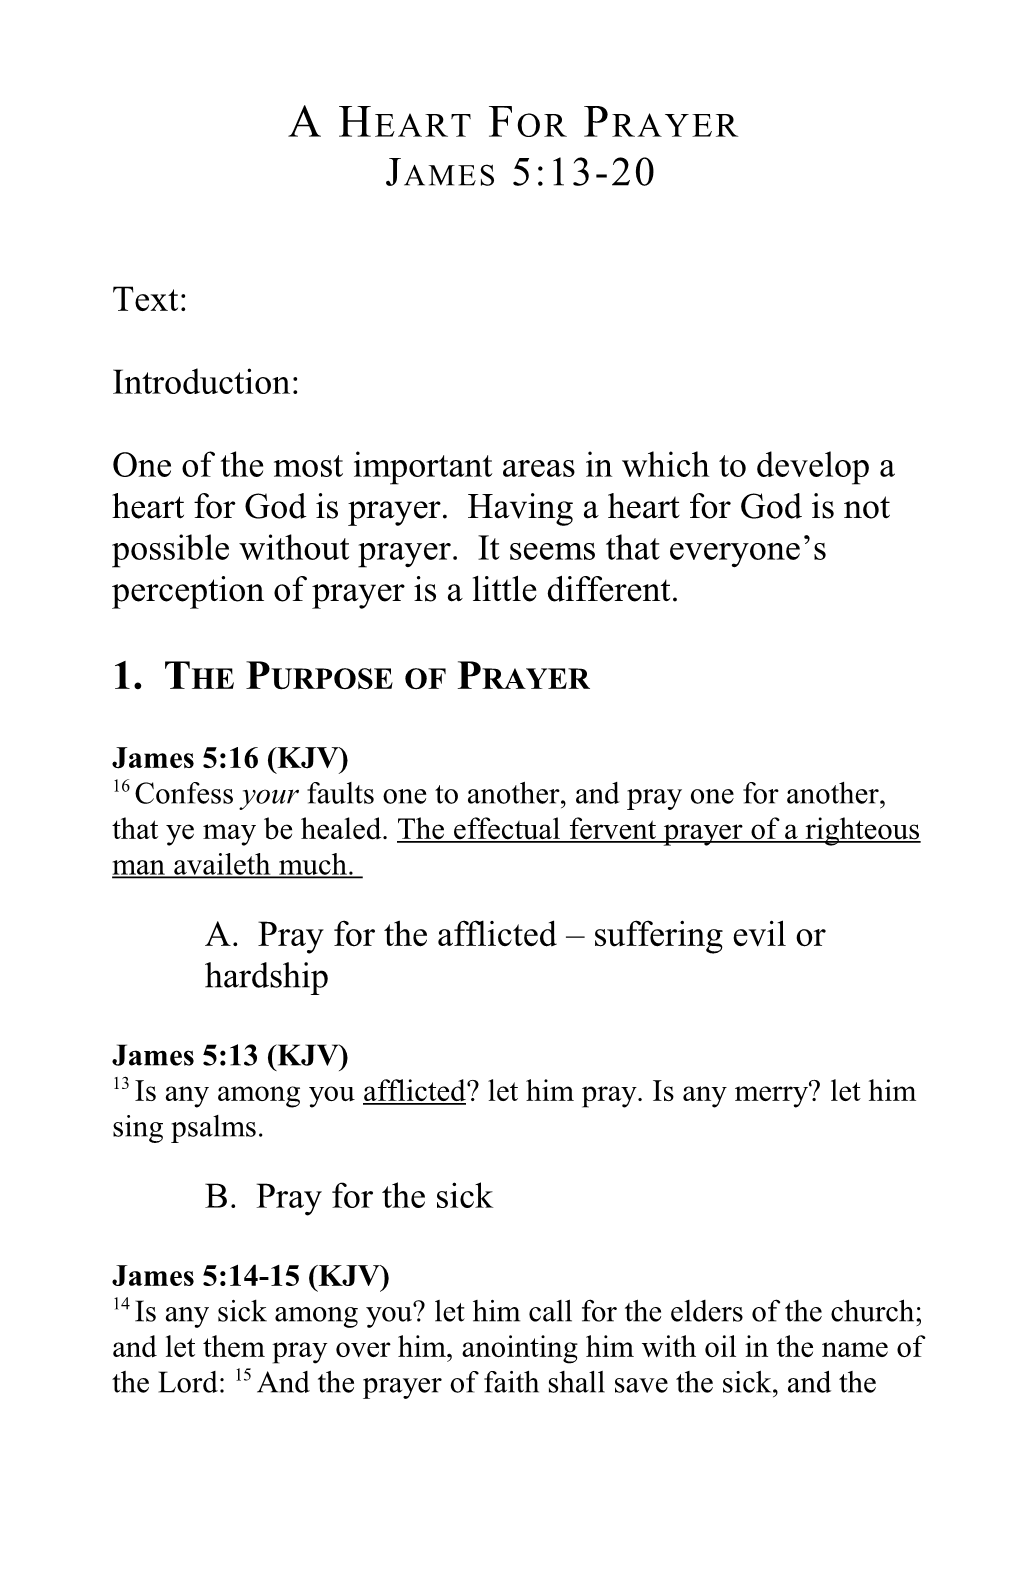 1. the Purpose of Prayer